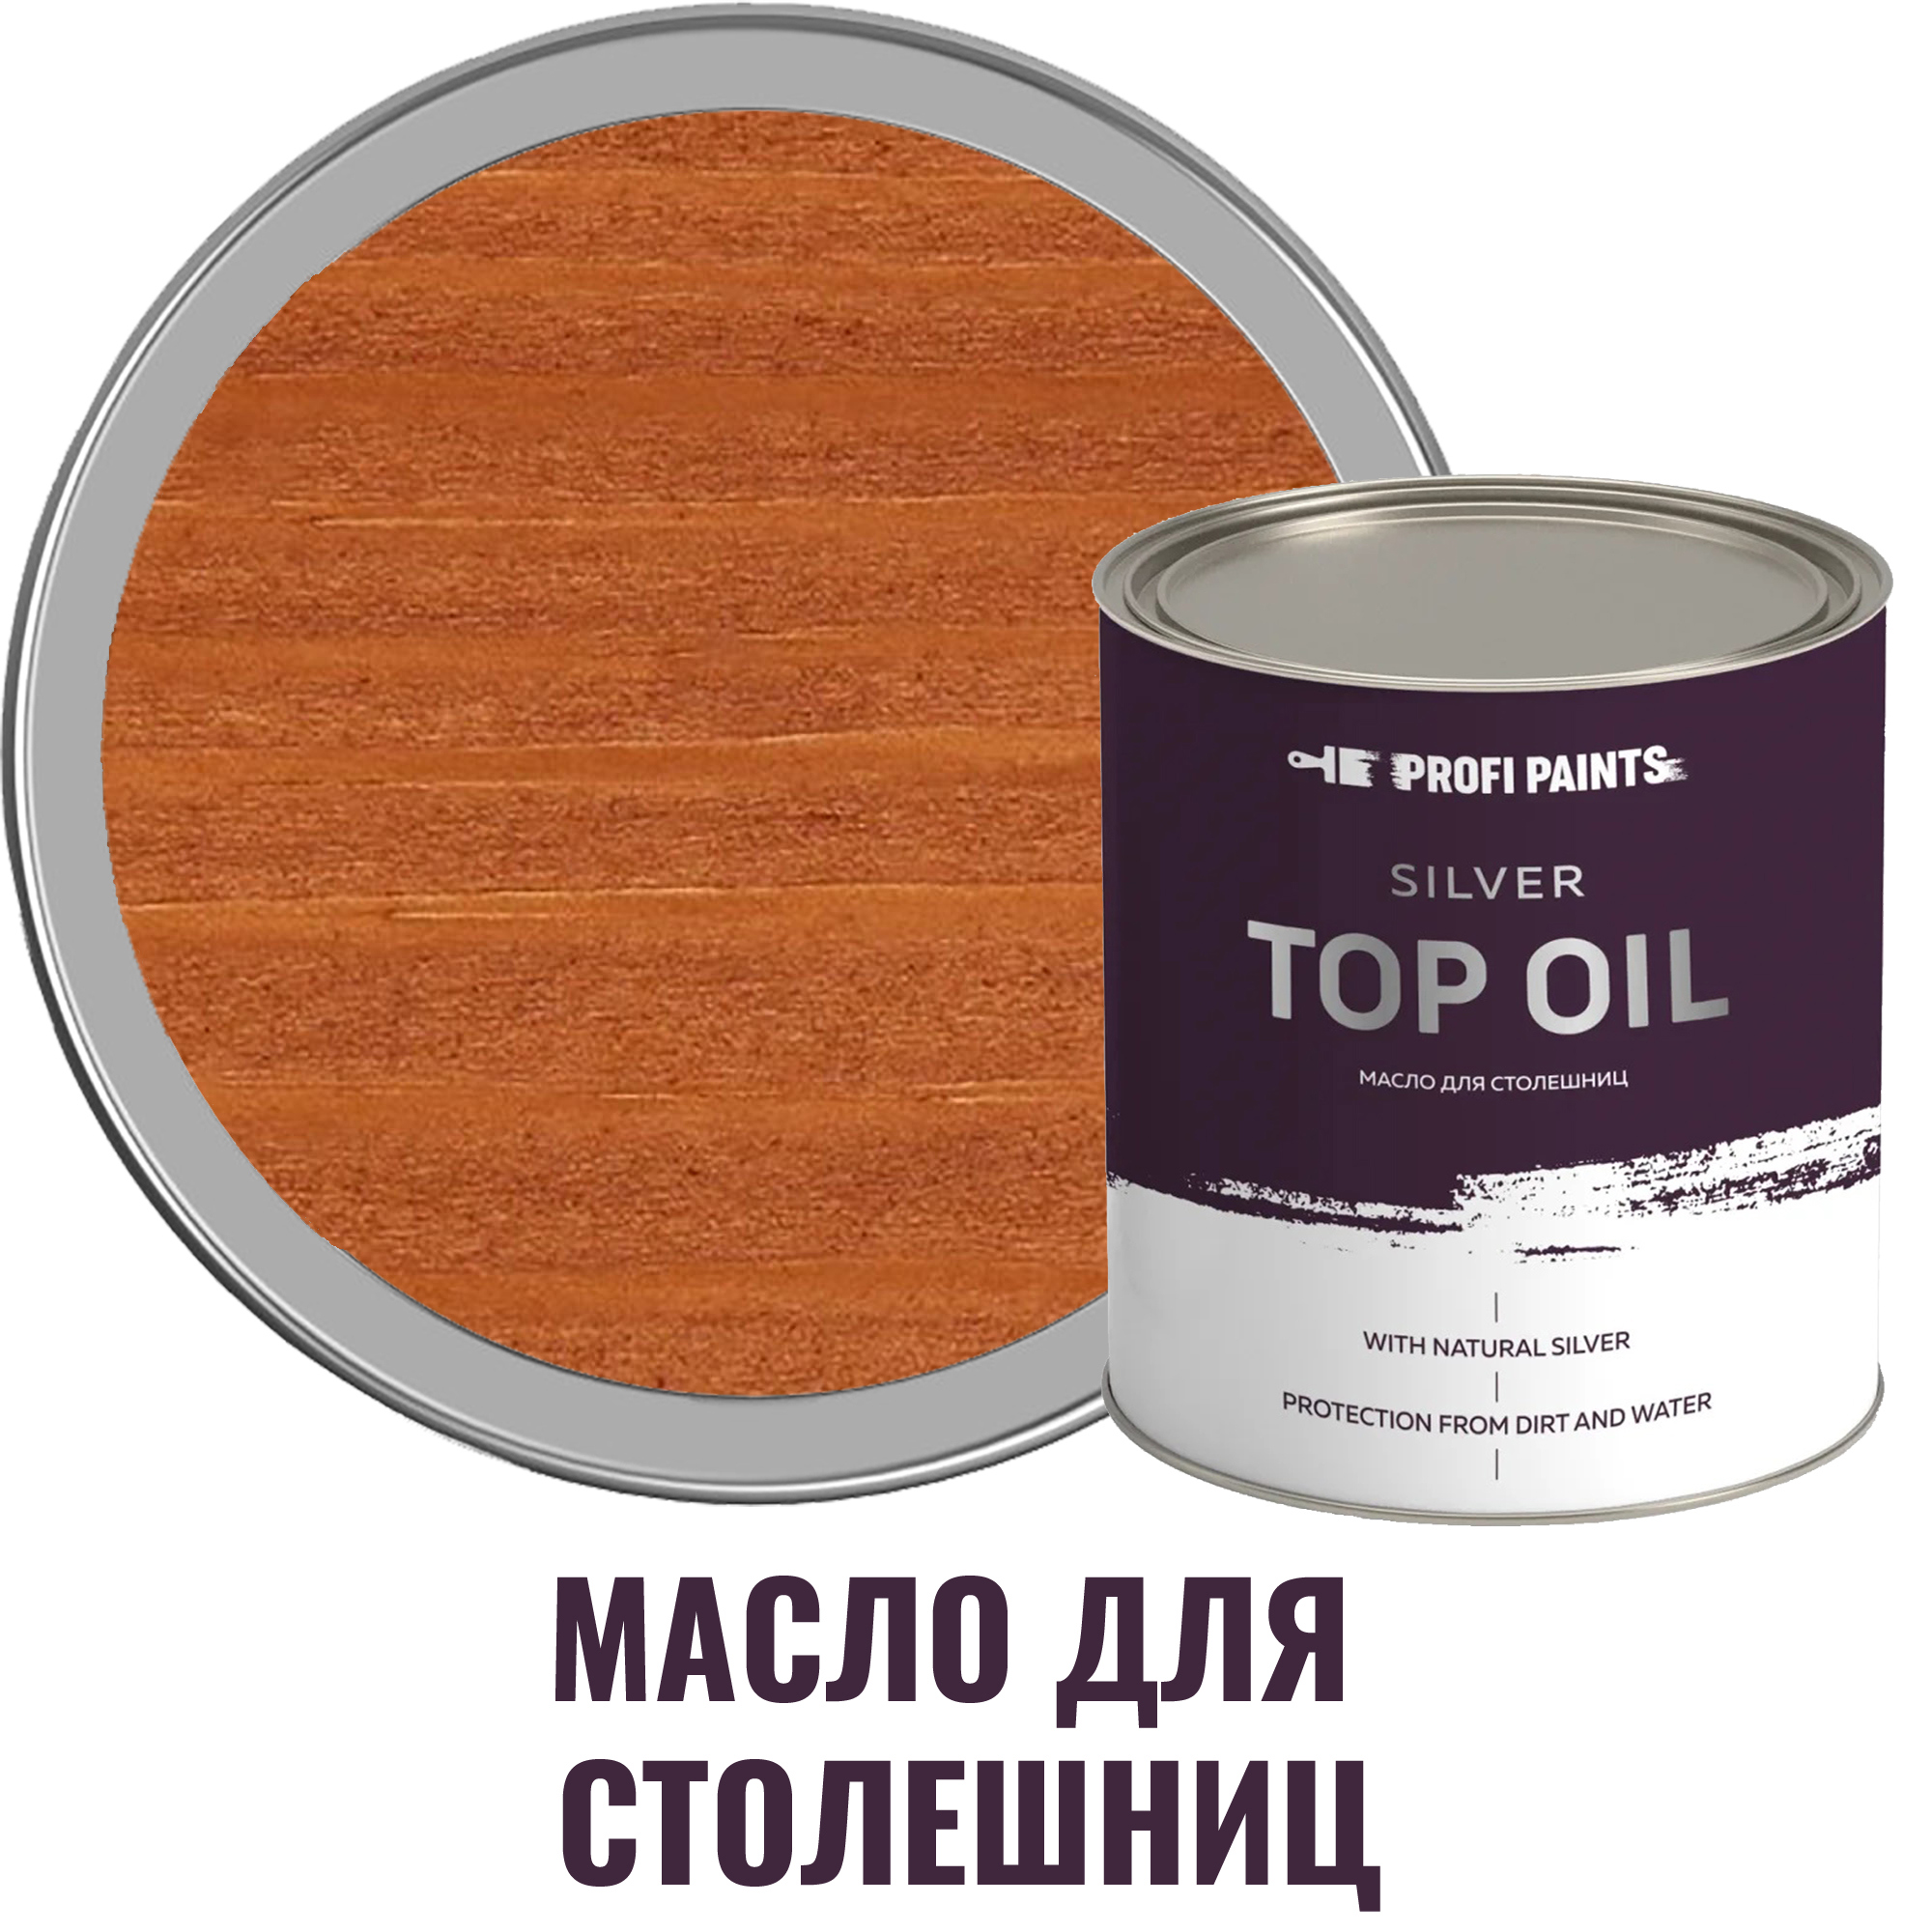 91095506 Масло для столешниц 10713_D Silver Top Oil цвет вишня 0.9 л STLM-0481860 PROFIPAINTS